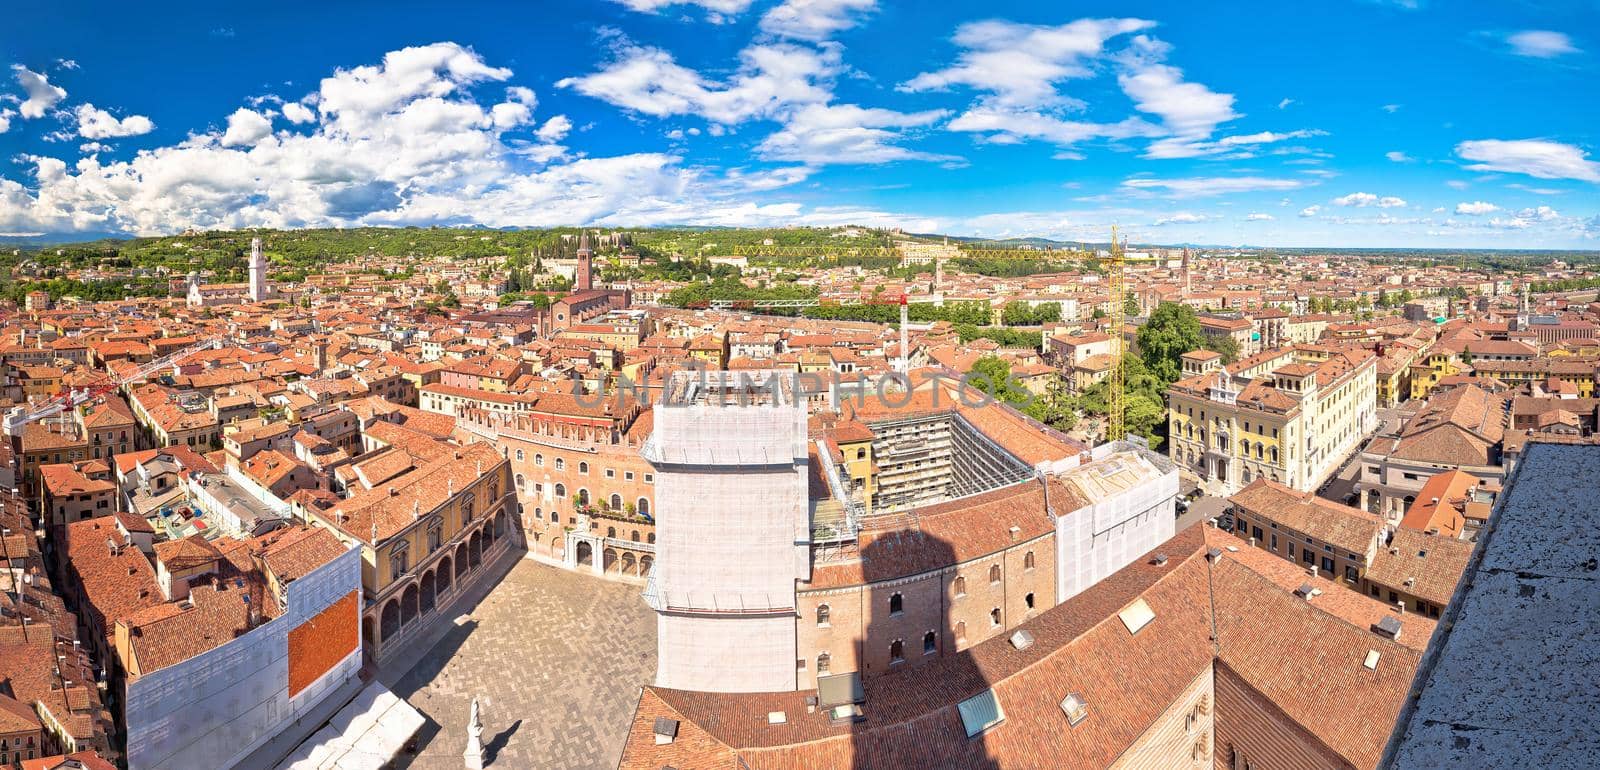 City of Verona aerial panoramic view from Lamberti tower by xbrchx